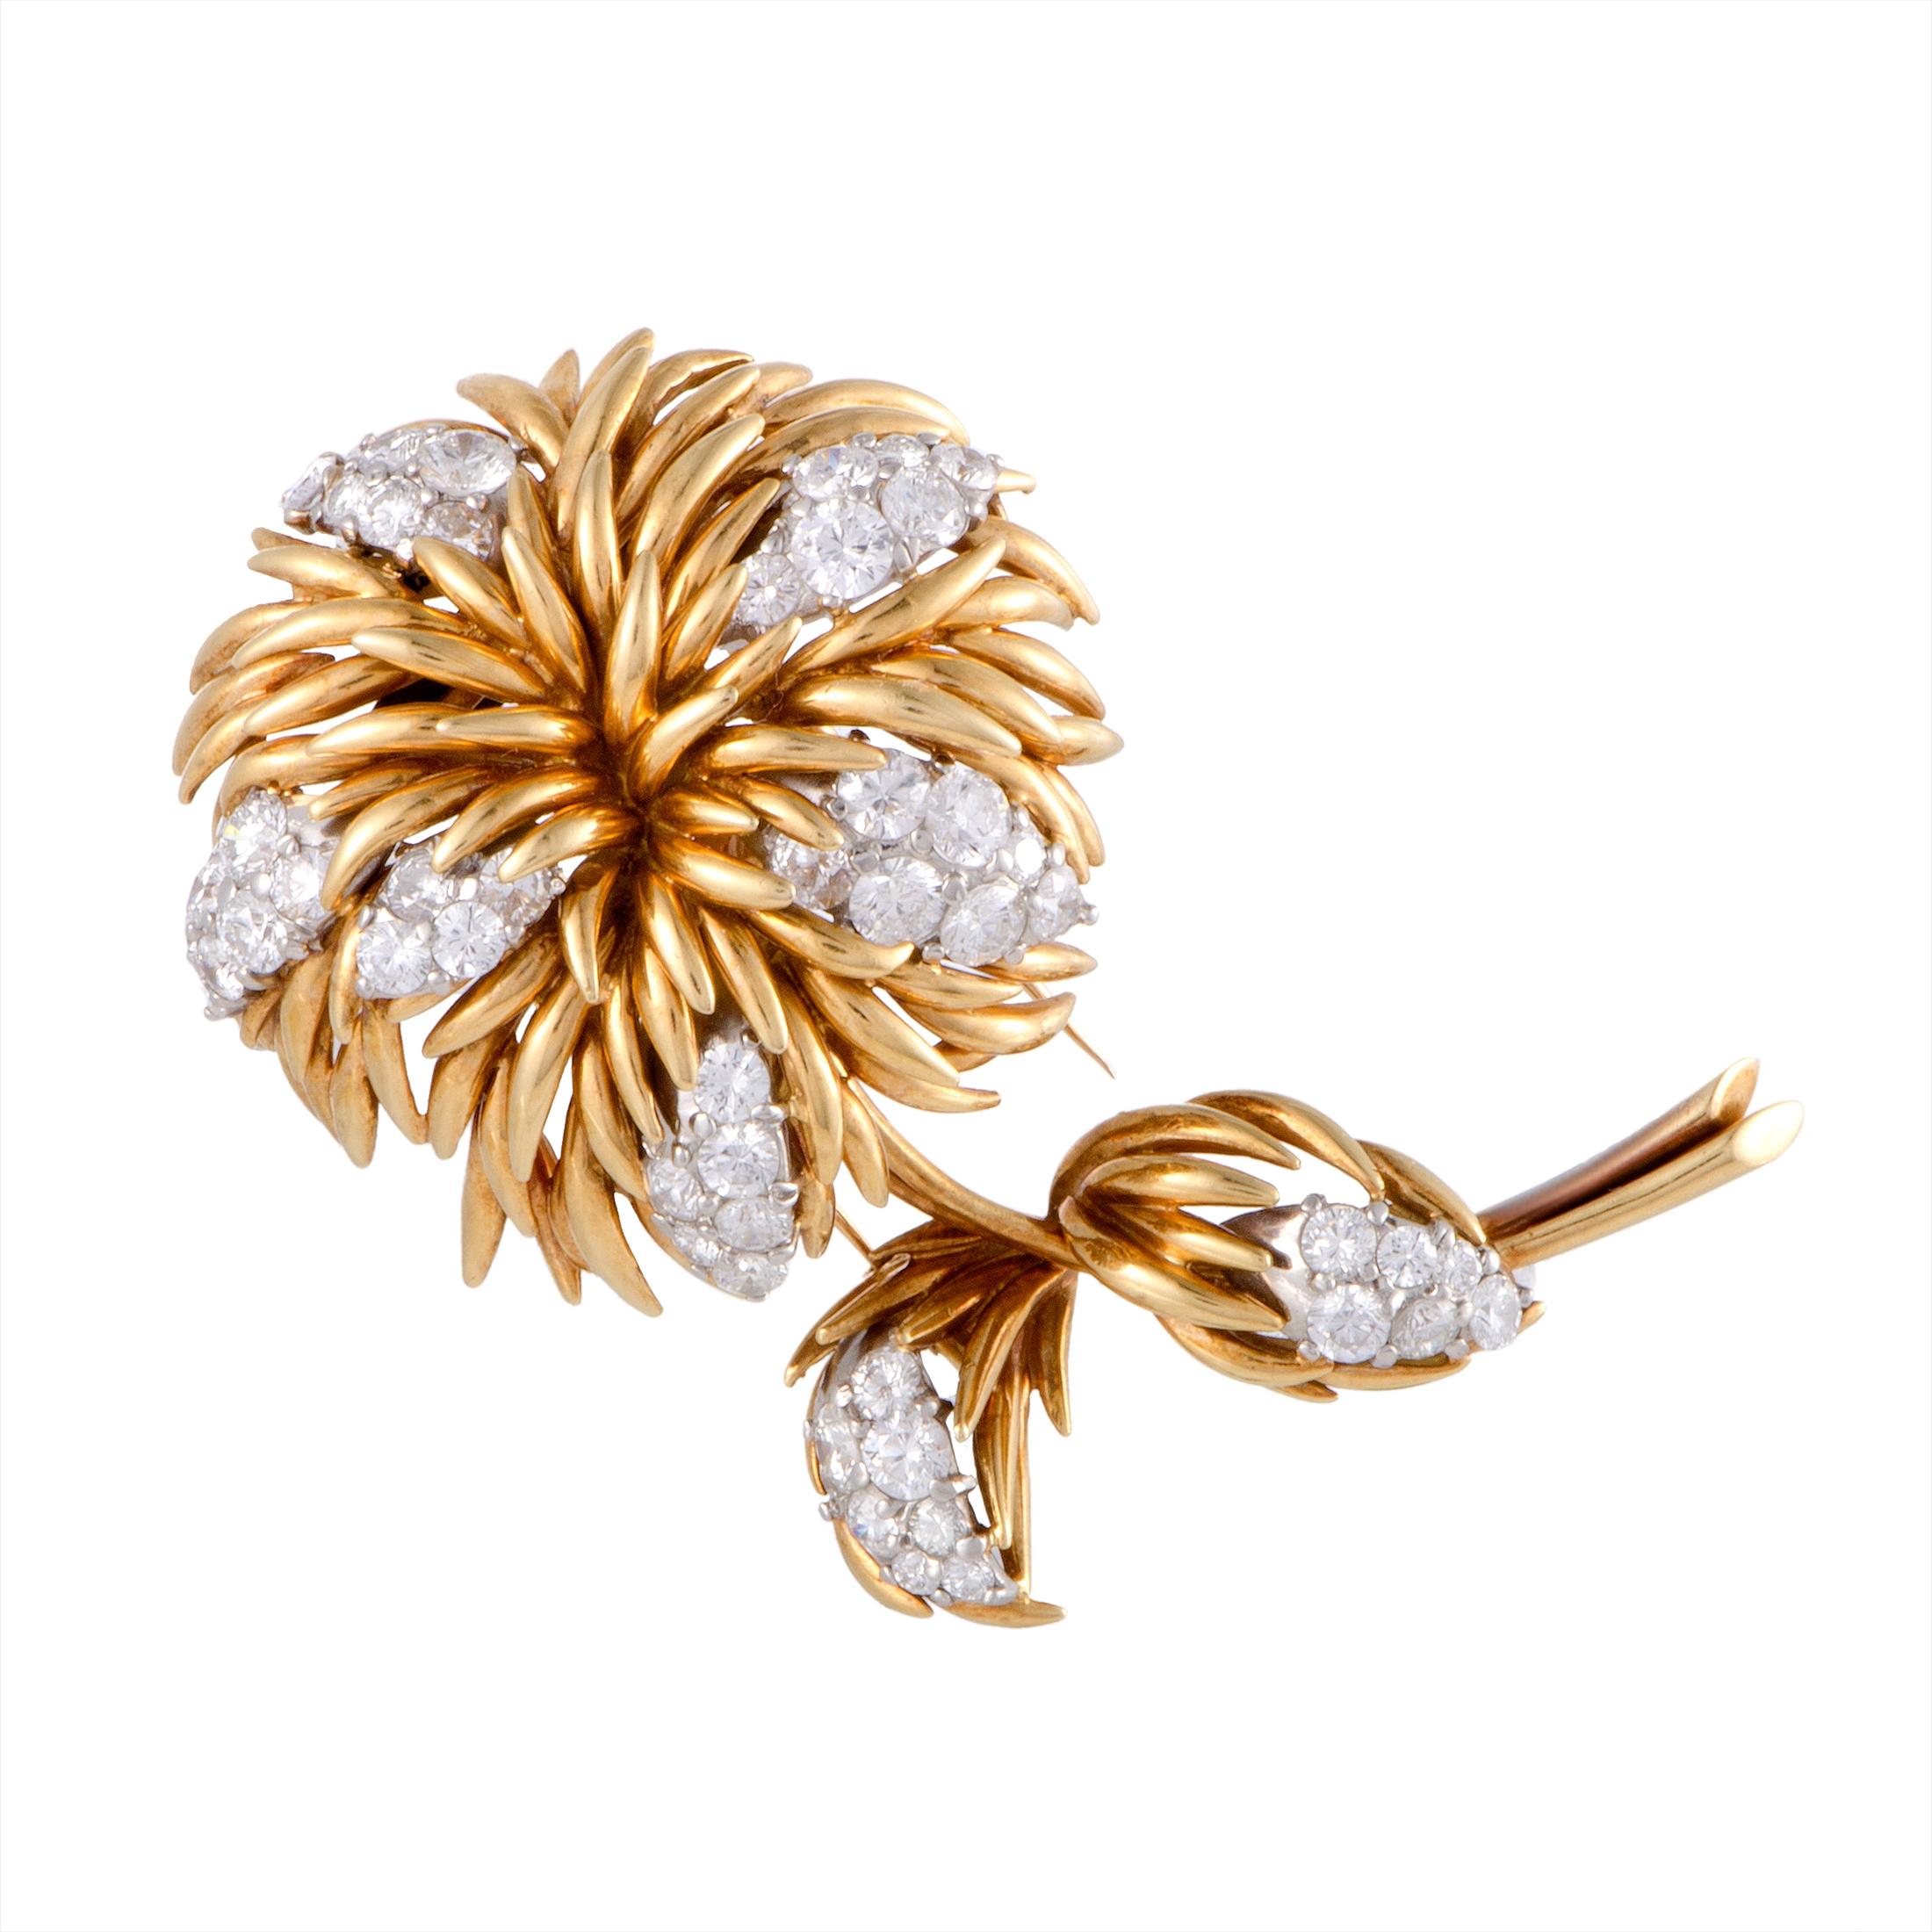 Van Cleef & Arpels 18 Karat Yellow and White Gold Diamond Flower Brooch